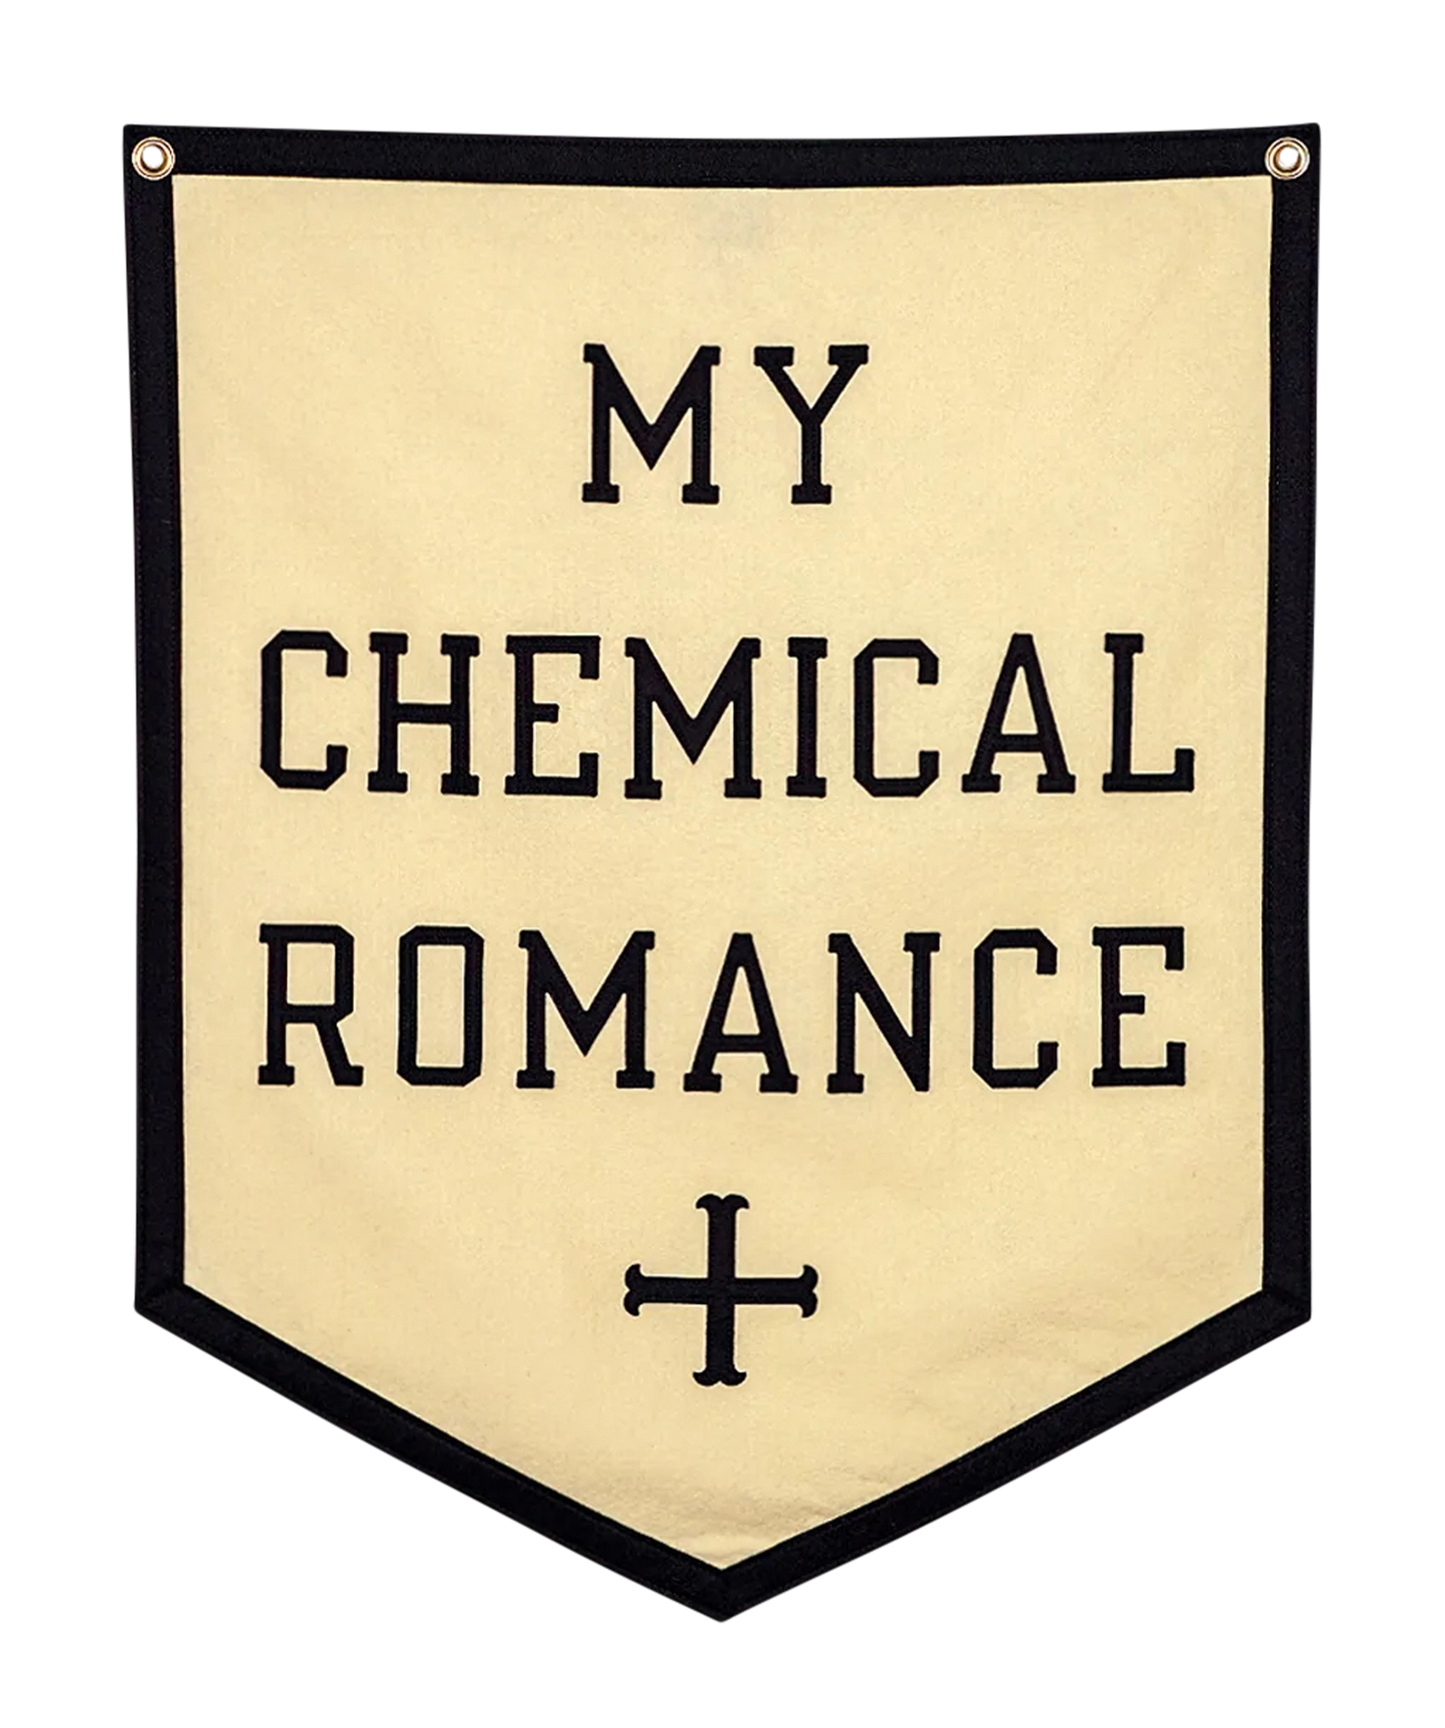 My Chemical Romance Championship Banner - MCR x Oxford Pennant